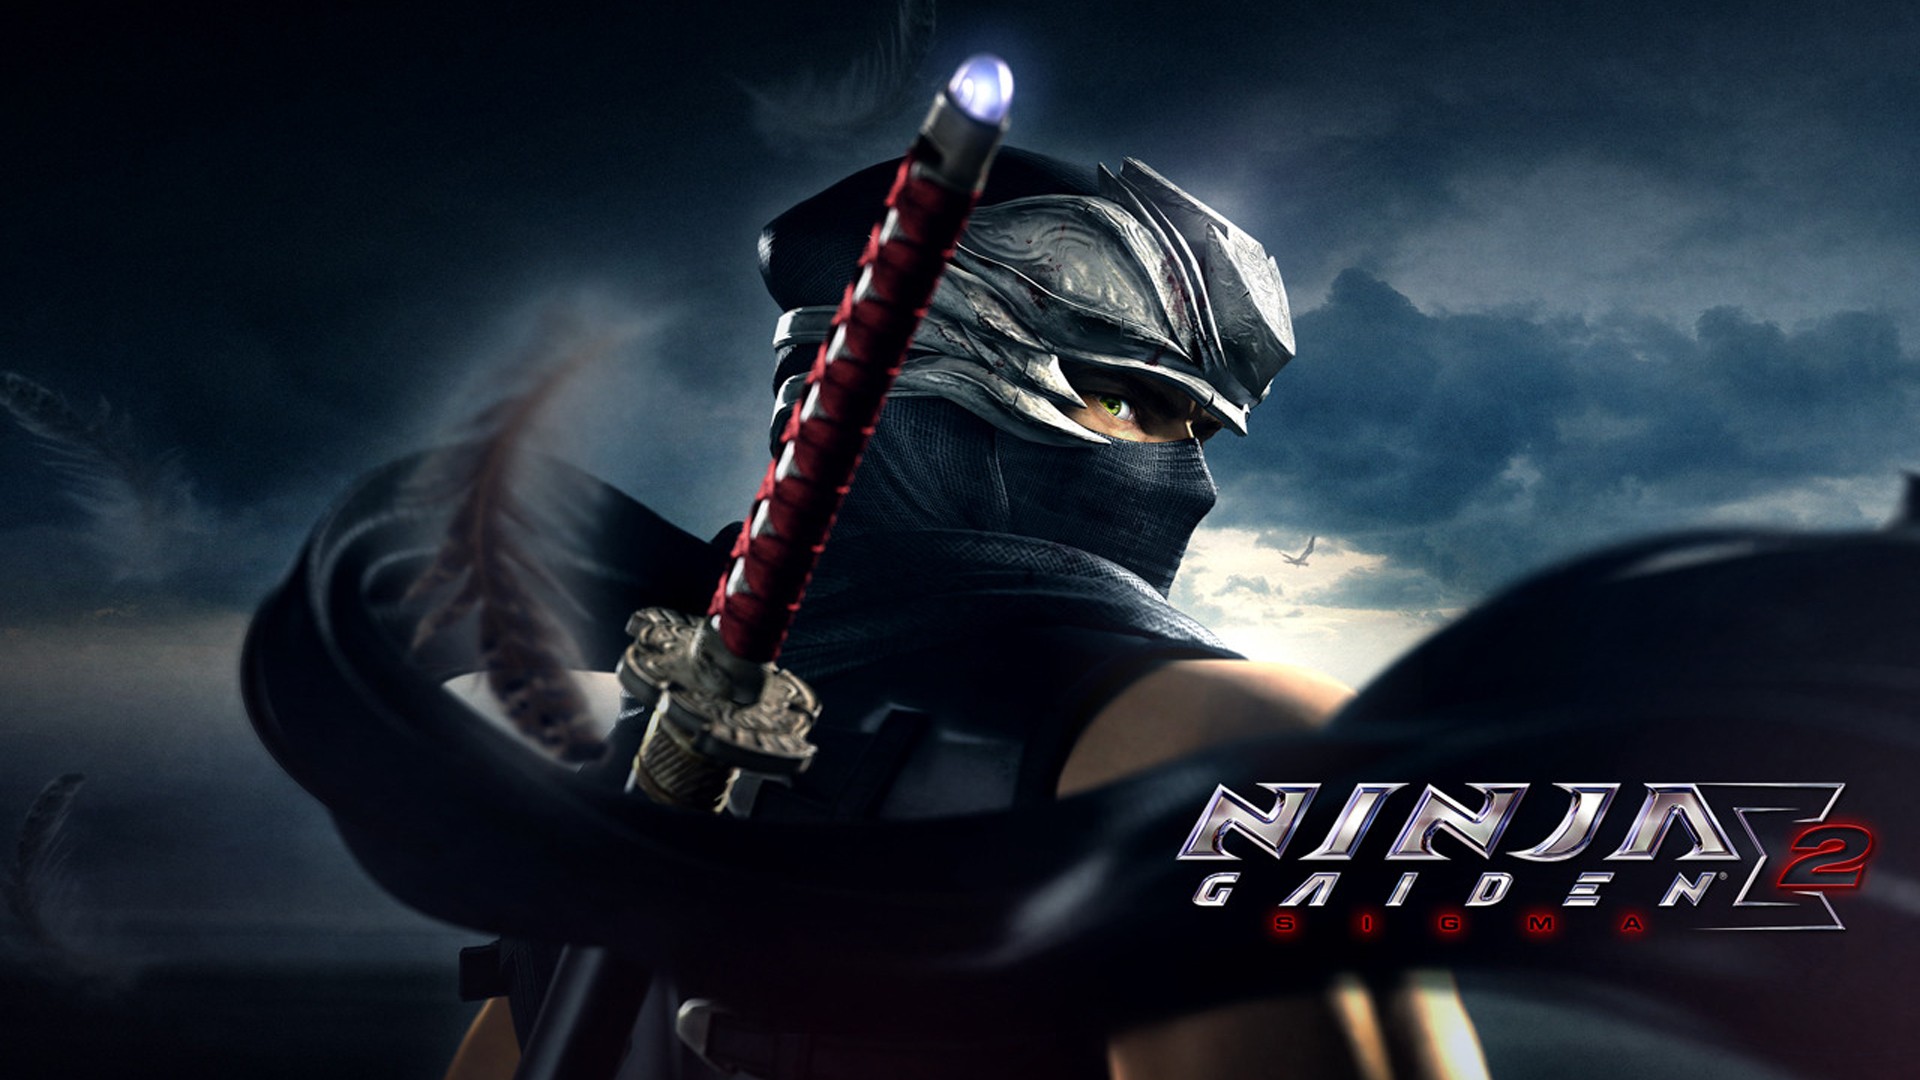 Video Game Ninja Gaiden Sigma 2 HD Wallpaper | Background Image